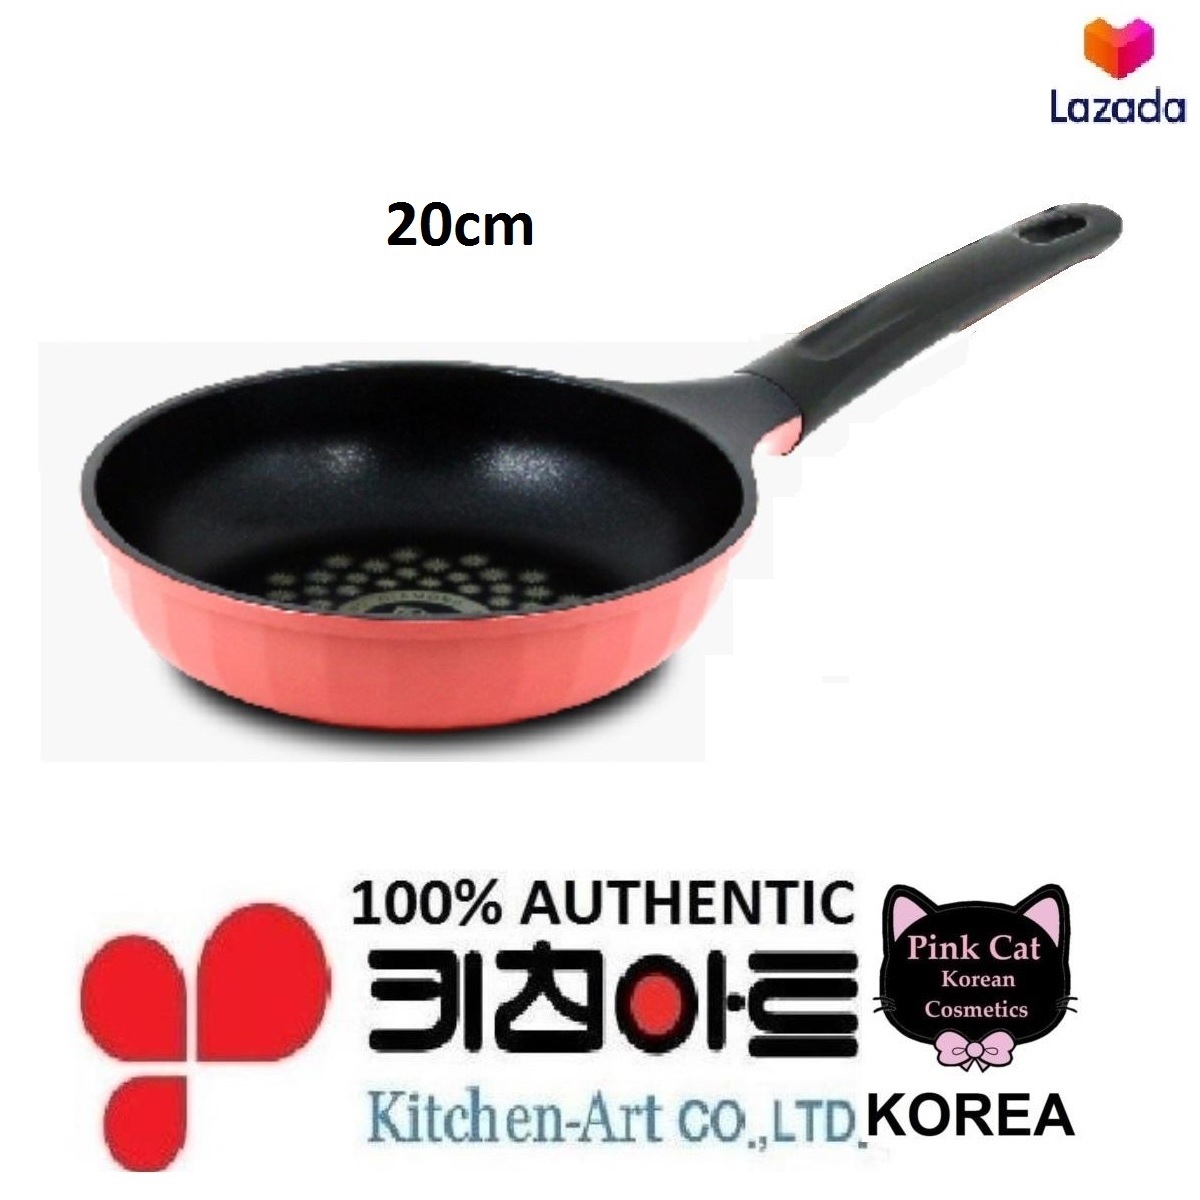 Double Sided Standard  Pan korea kitchen-art cook korea made 